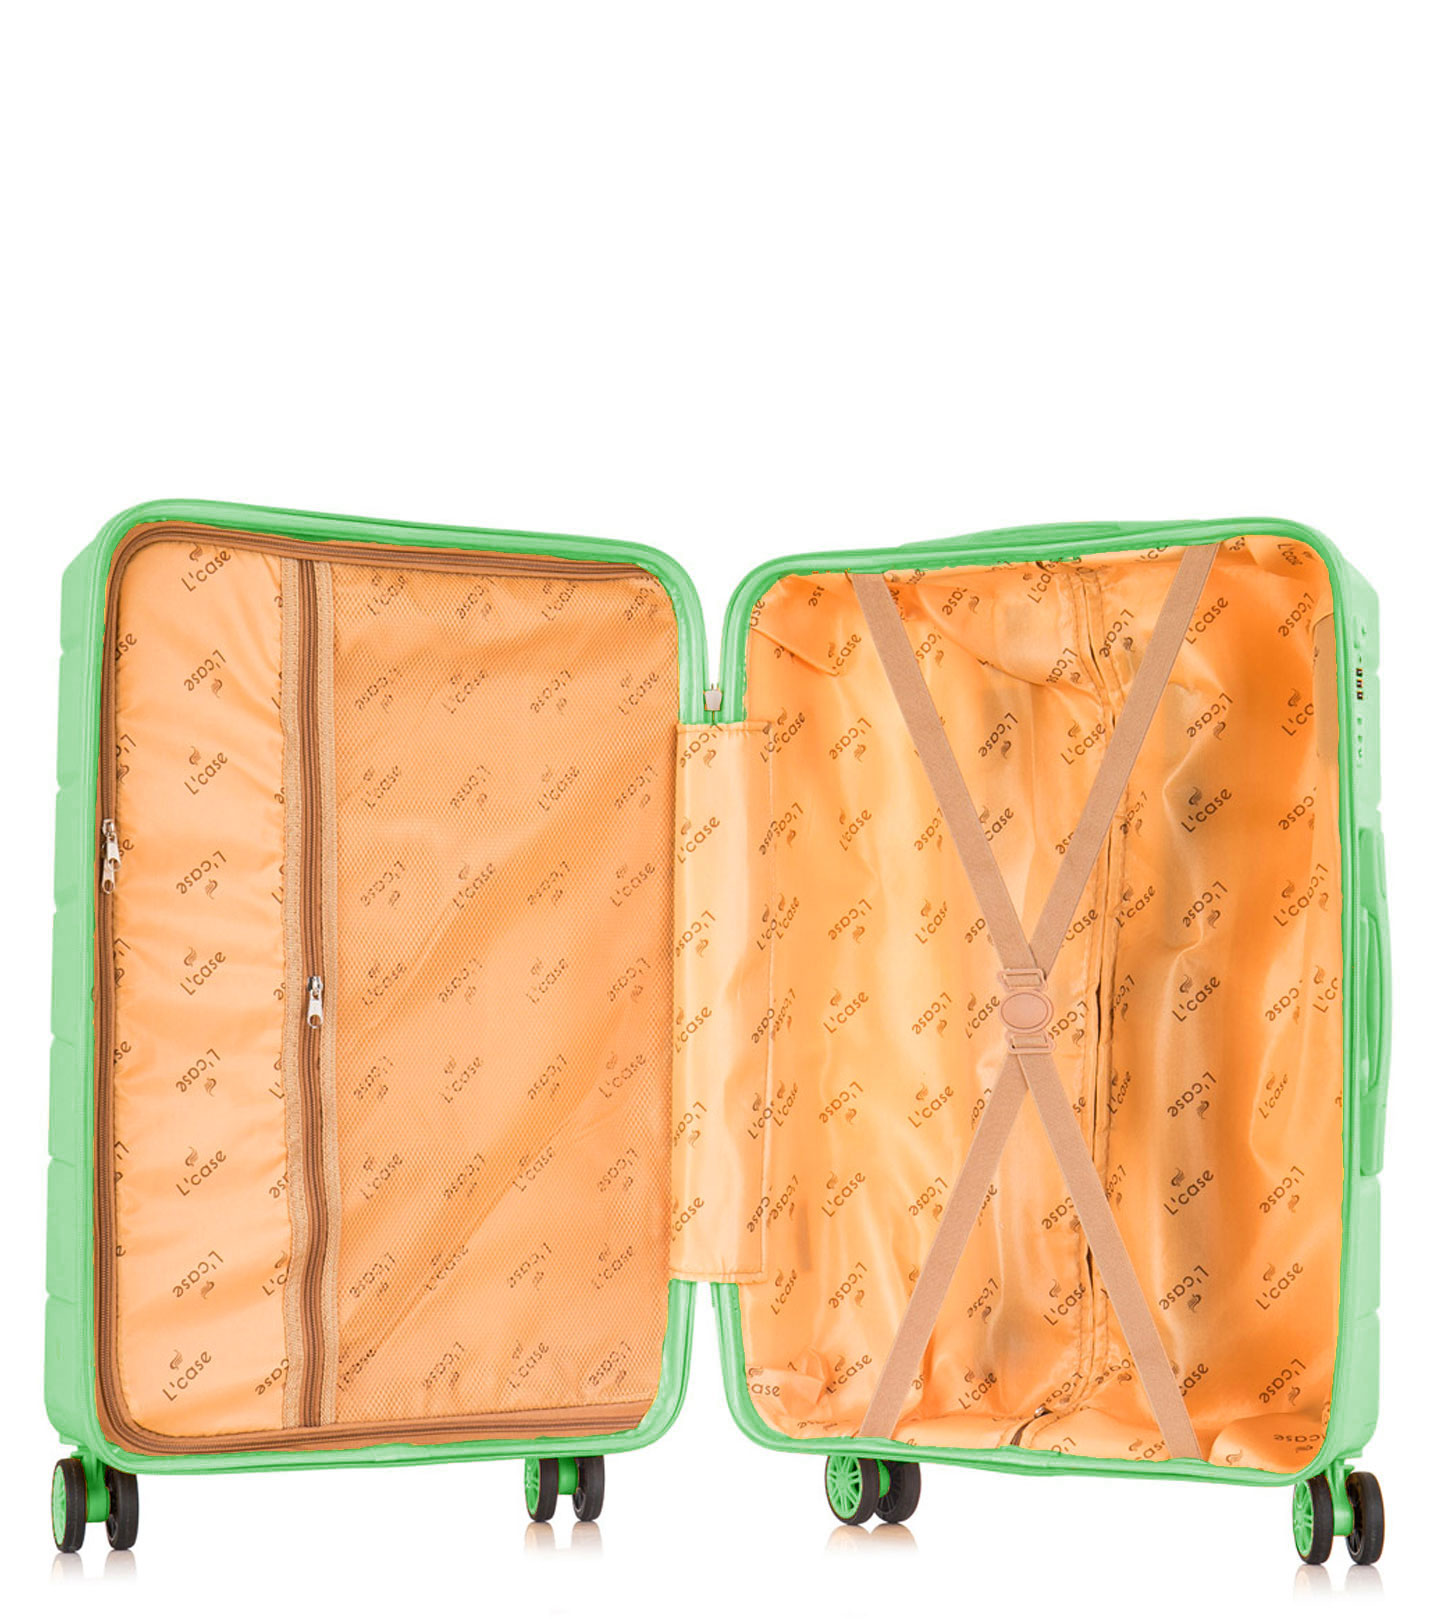 Малый чемодан спиннер L-case Singapore - Light green (57 см)